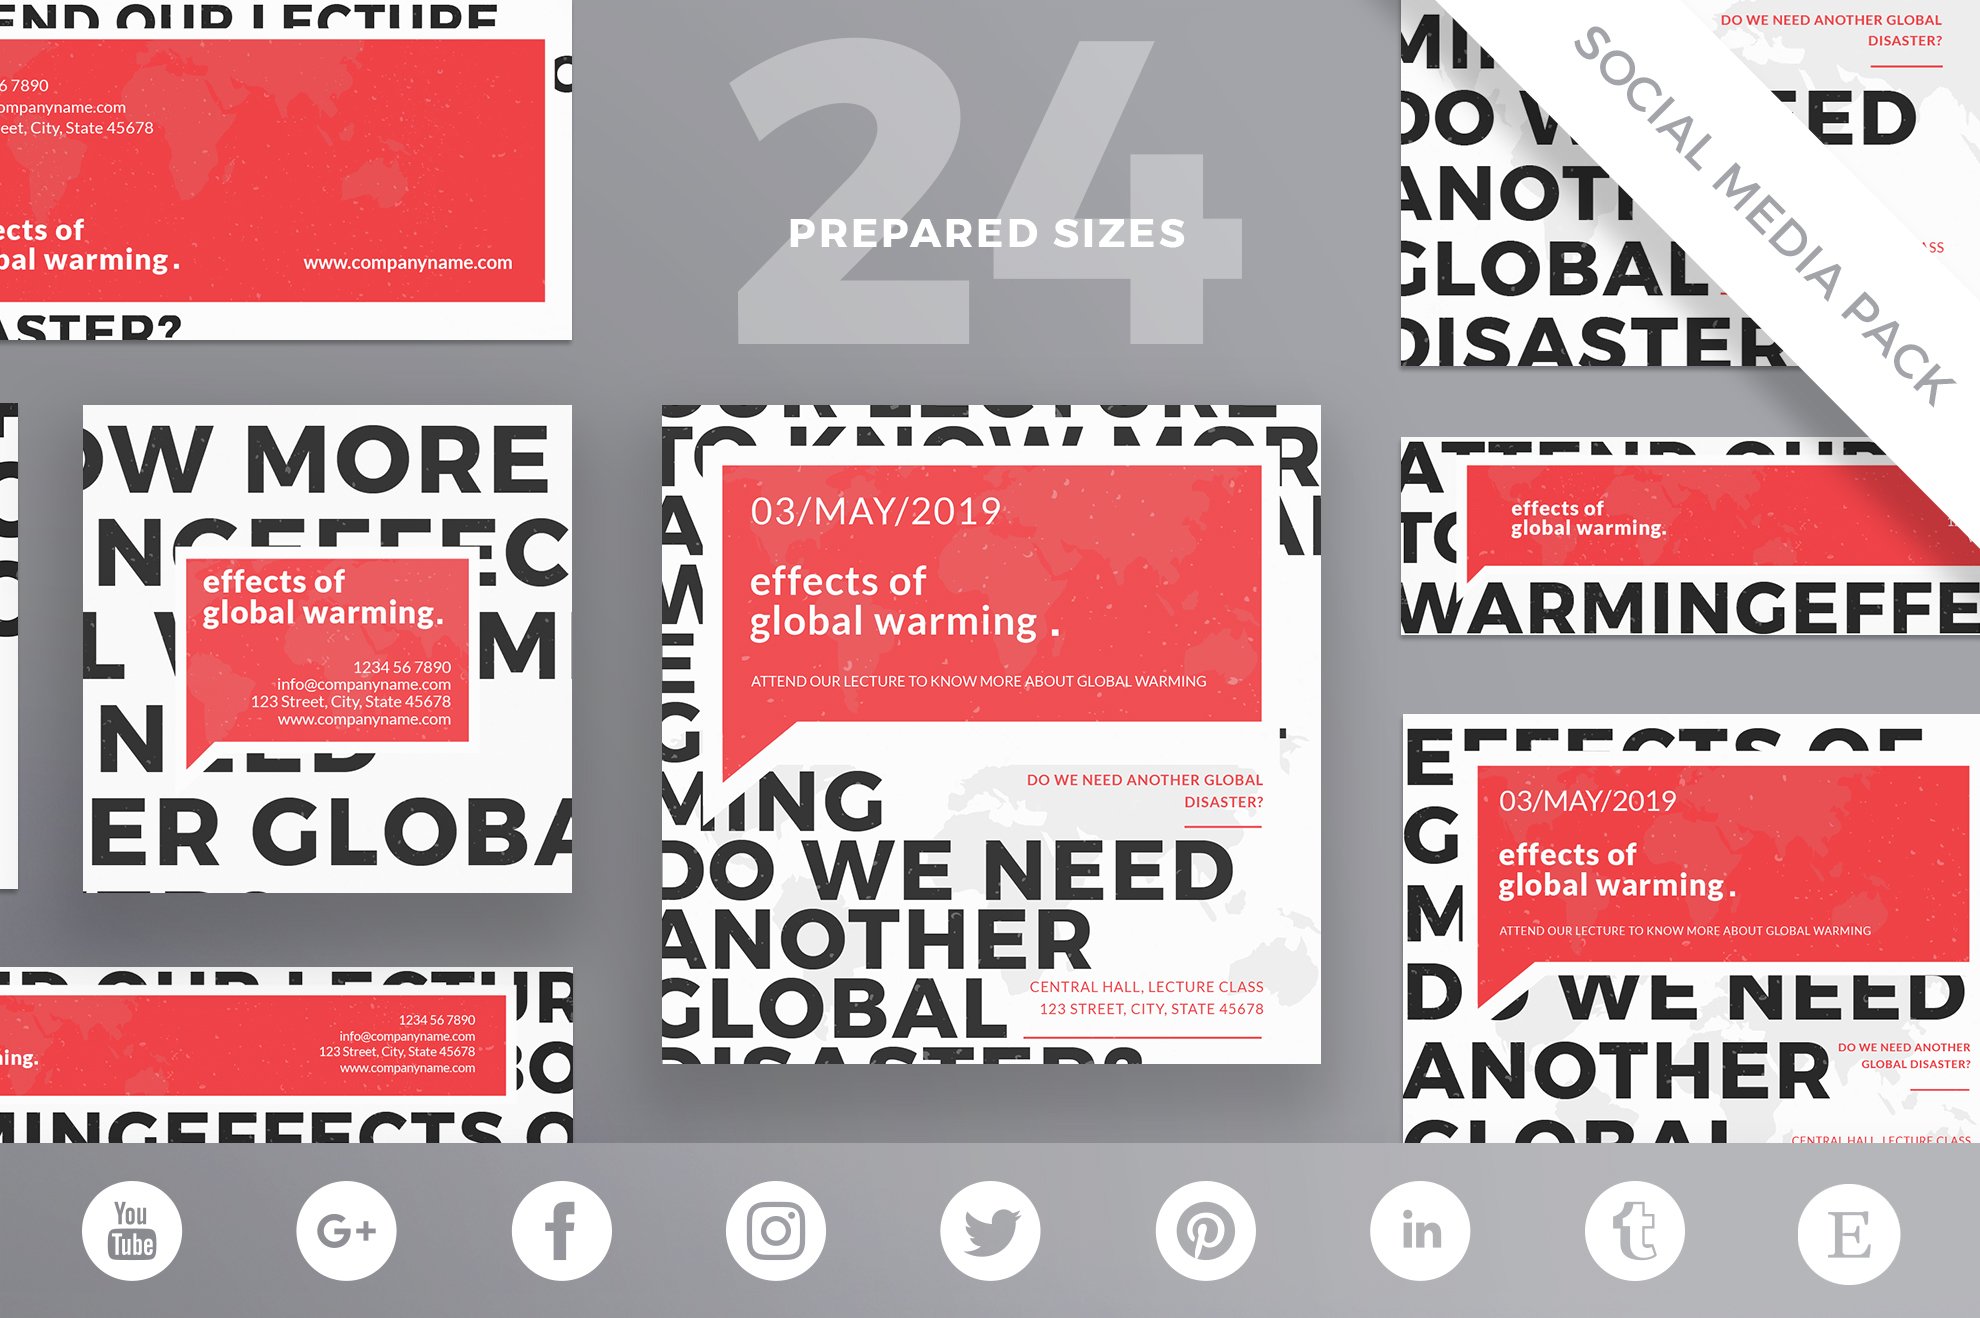 Social Media Pack | Global Warming cover image.